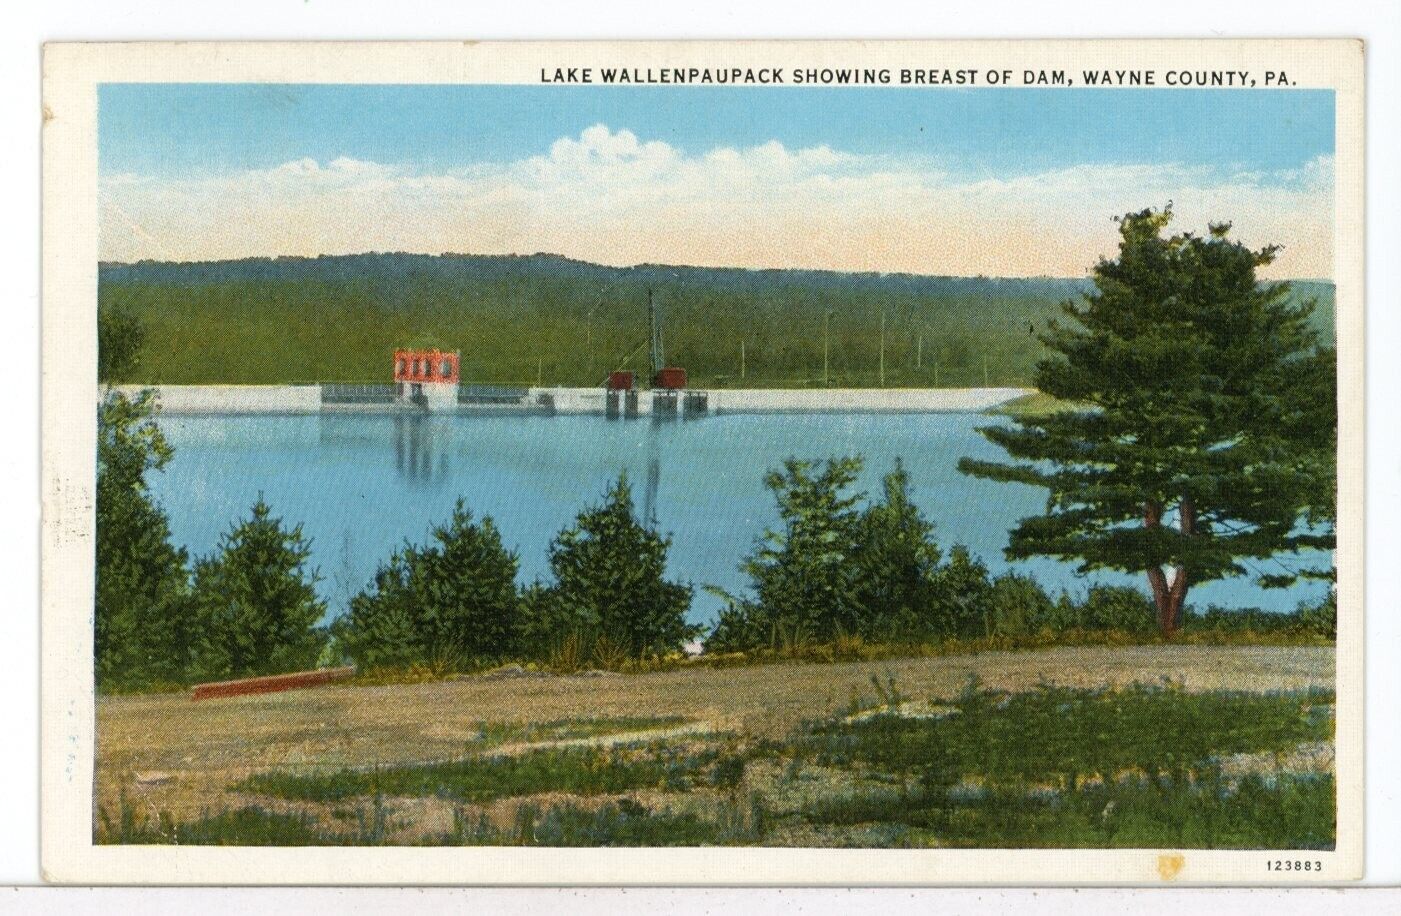 1937 - LAKE WALLENPAUPACK showing Breast of Dam, Wayne County, PA Postcard